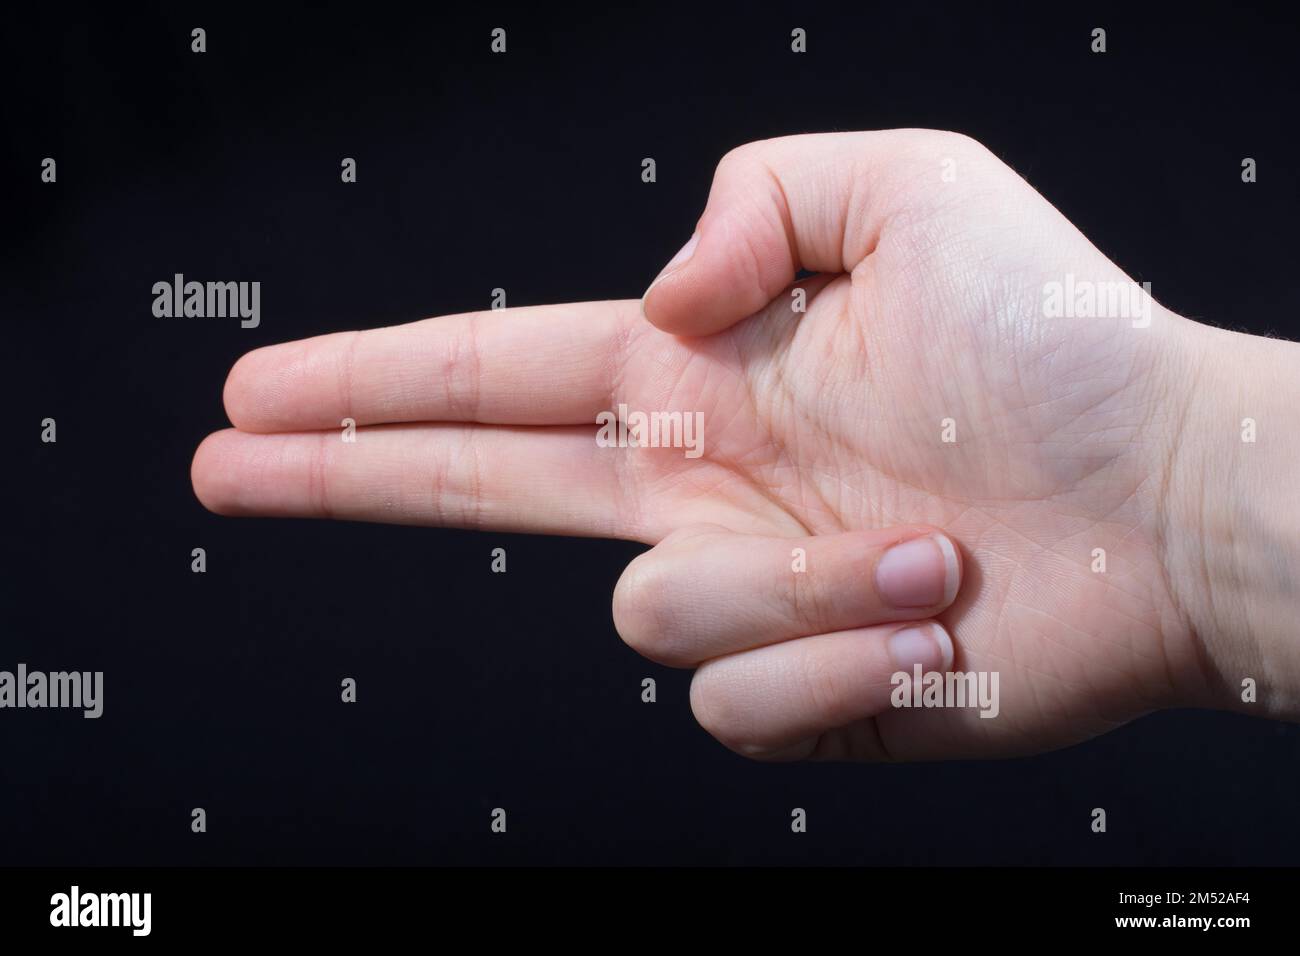 Hand gesture pointing fingers pistol-like handgun on black Stock Photo